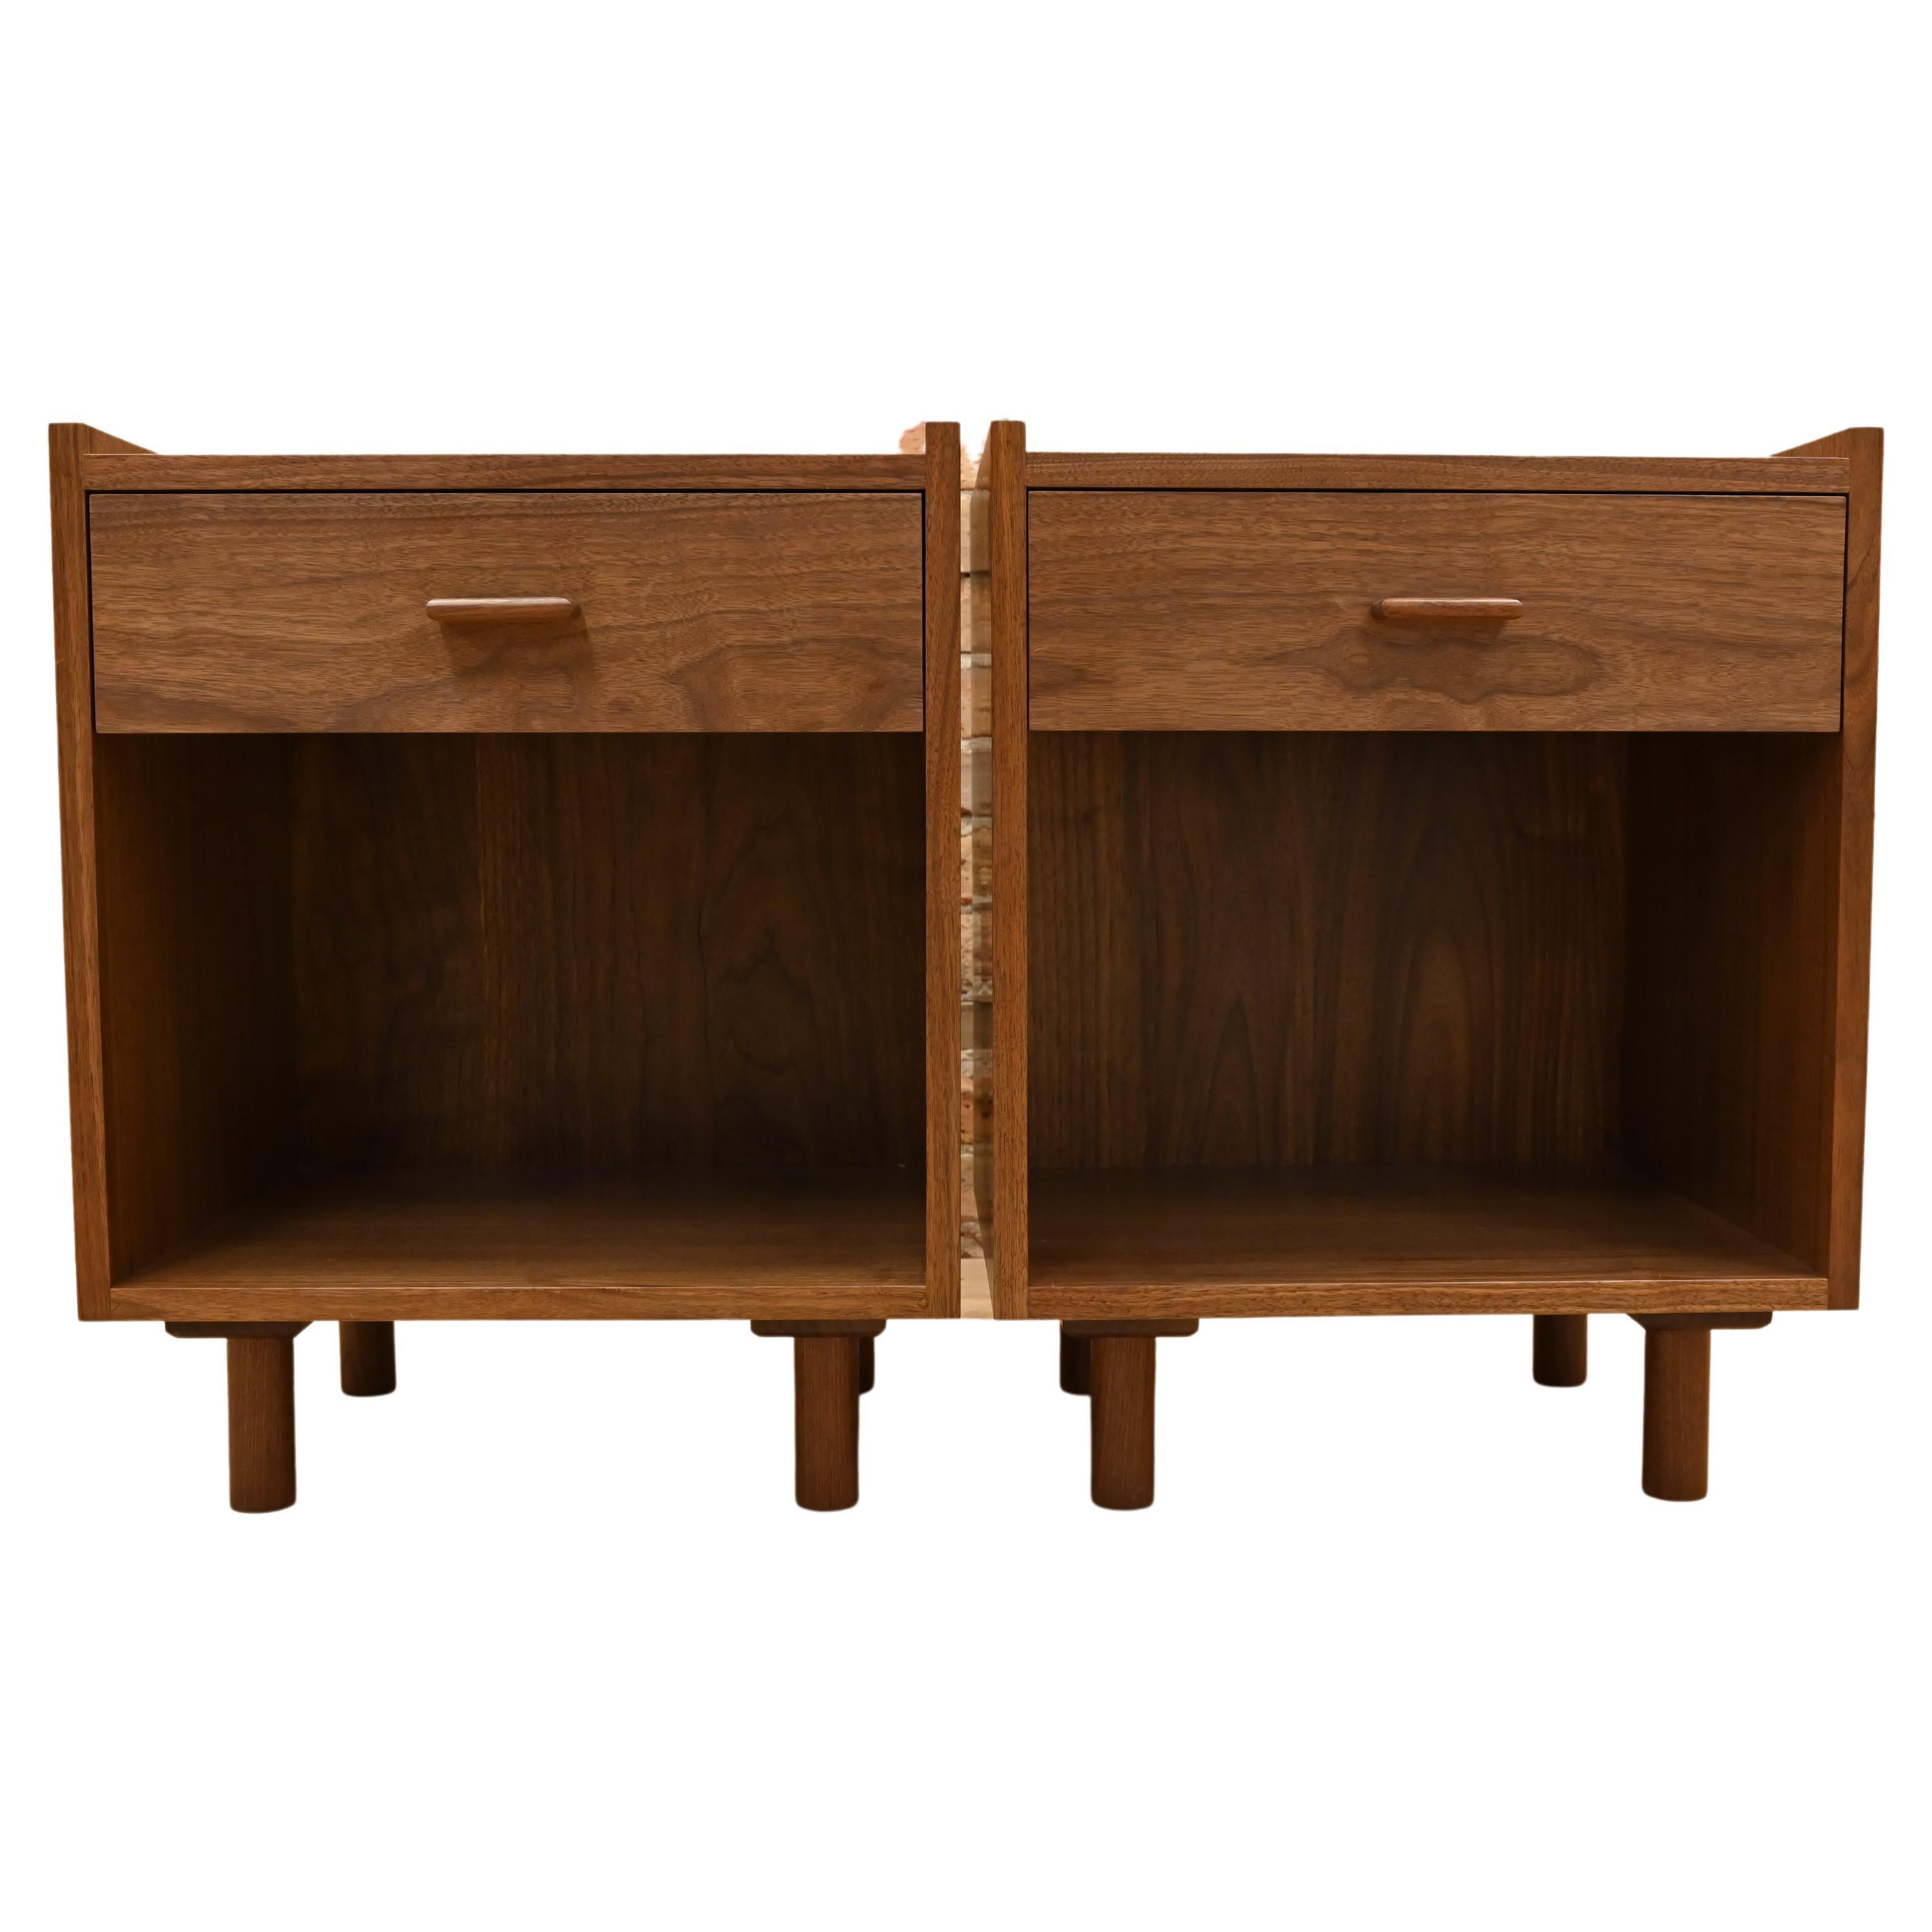 Carved Modern Wegner-Style Side Table Pair For Sale